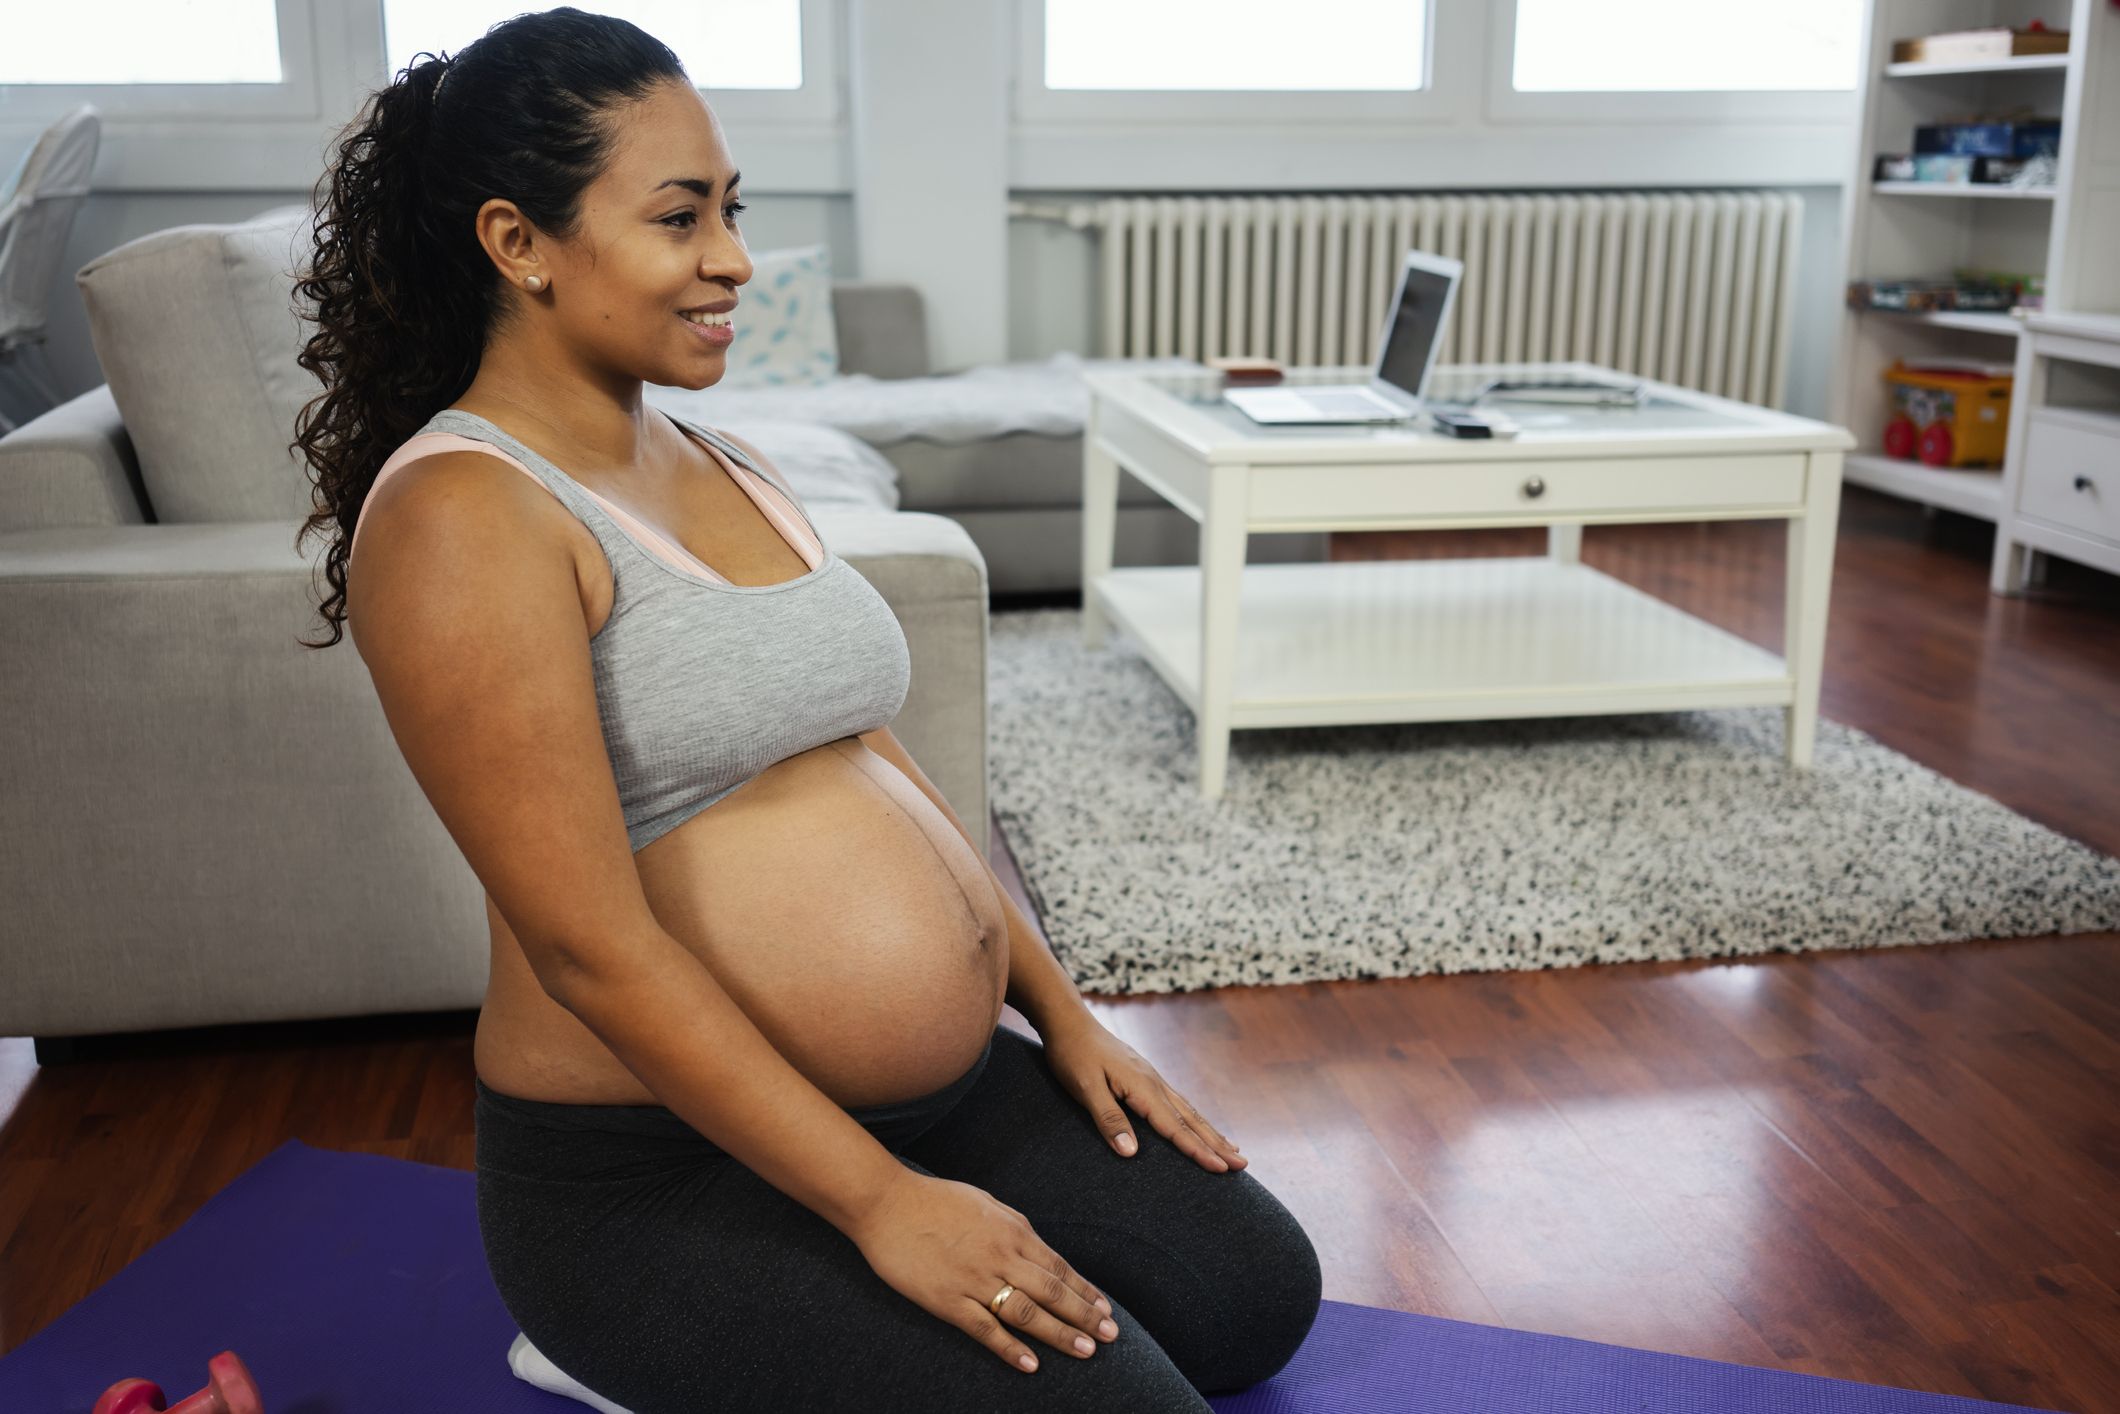 15 Best Pregnancy Exercises - Safe Pregnancy Exercises By Trimester